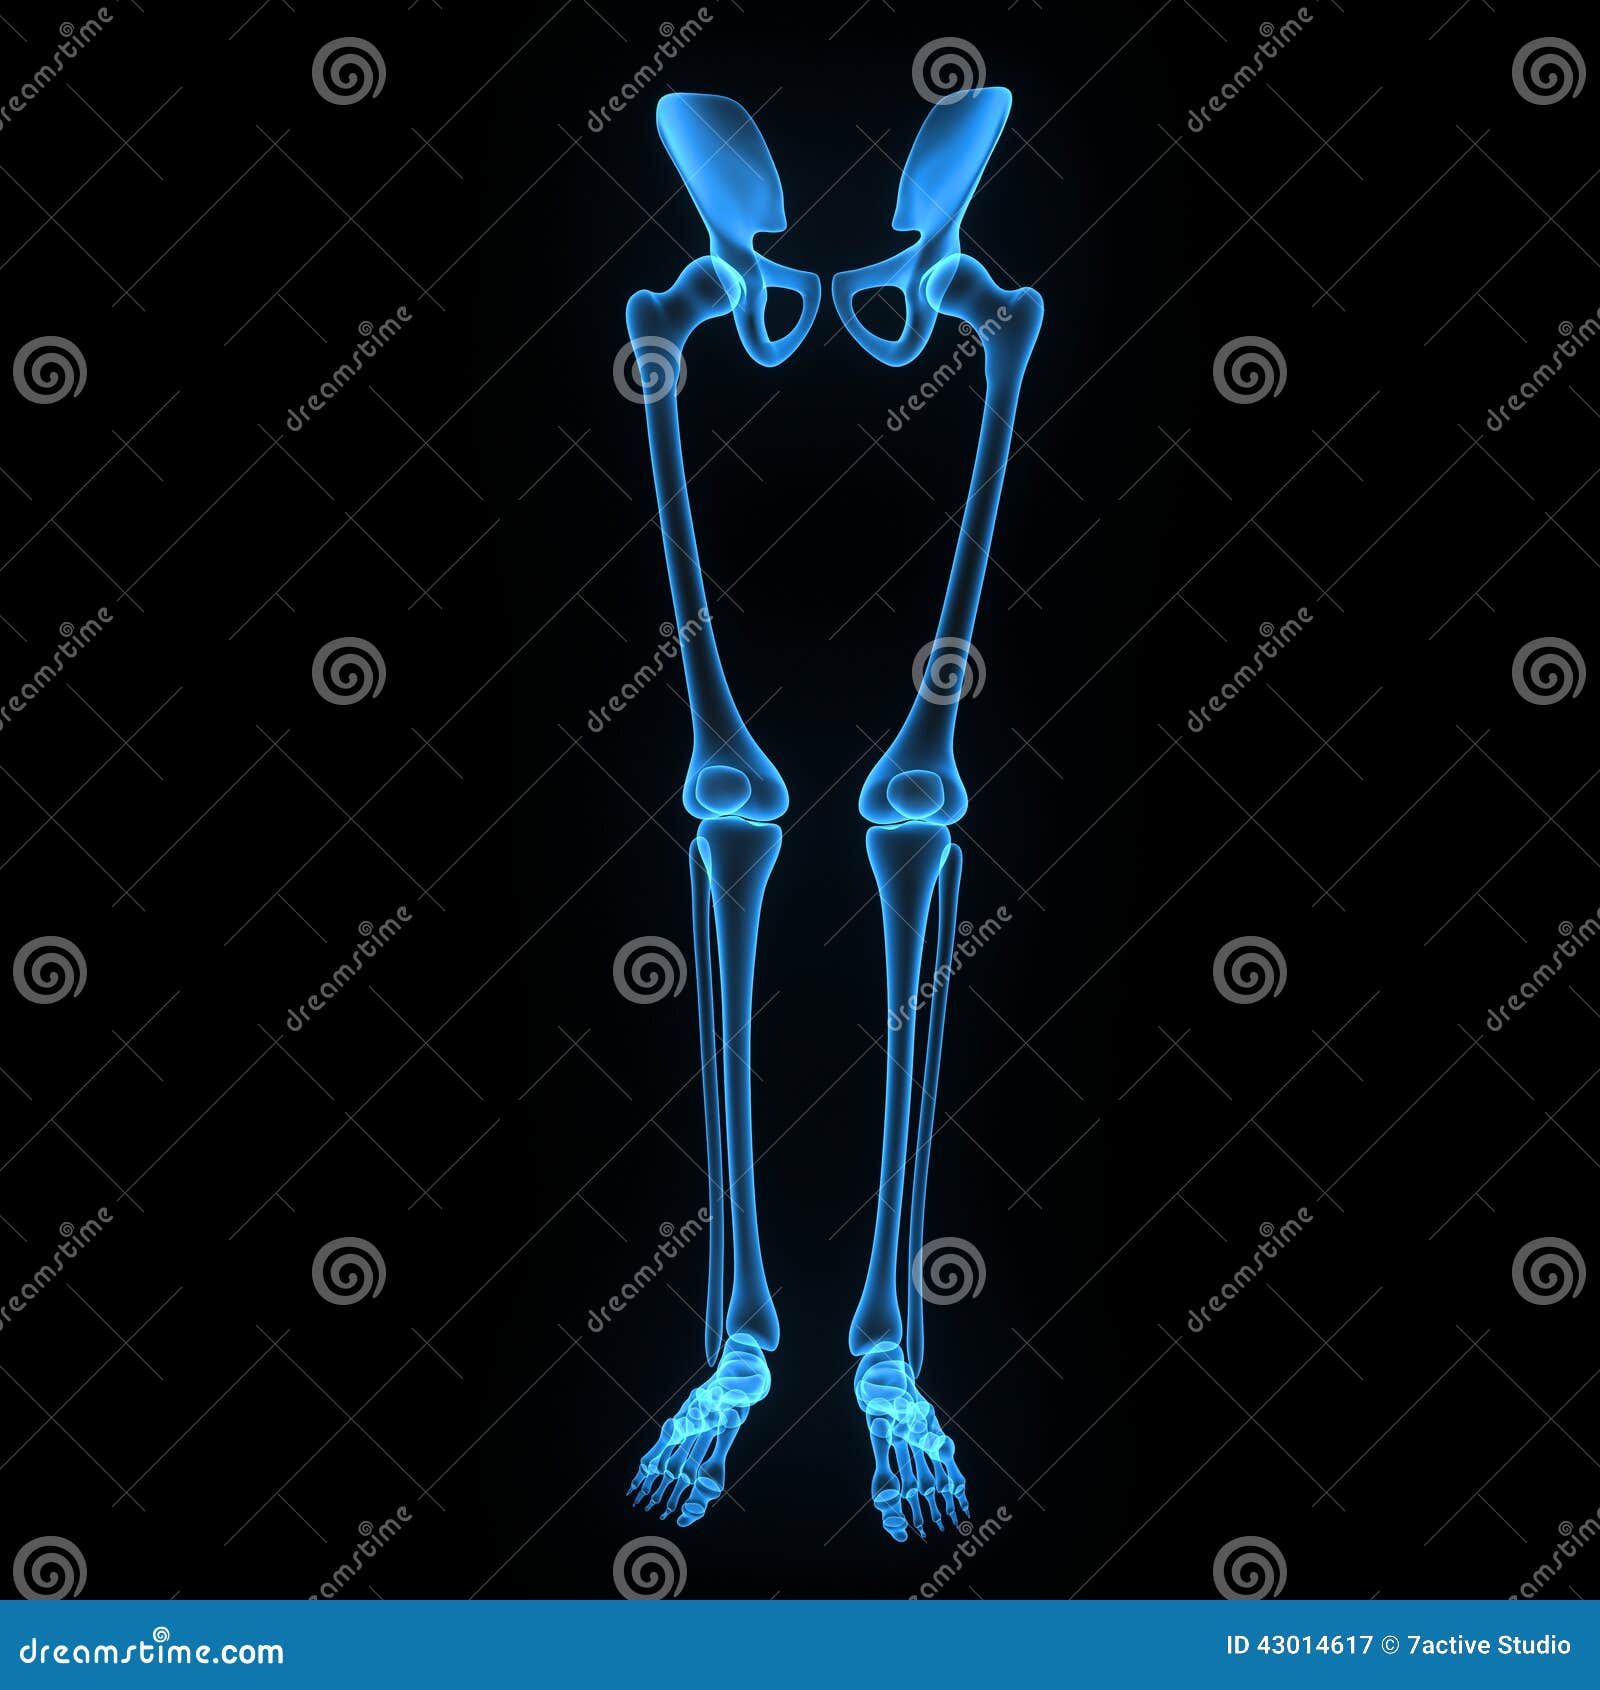 skeleton: hip, femur, tibia, fibula, ankle and foot bones